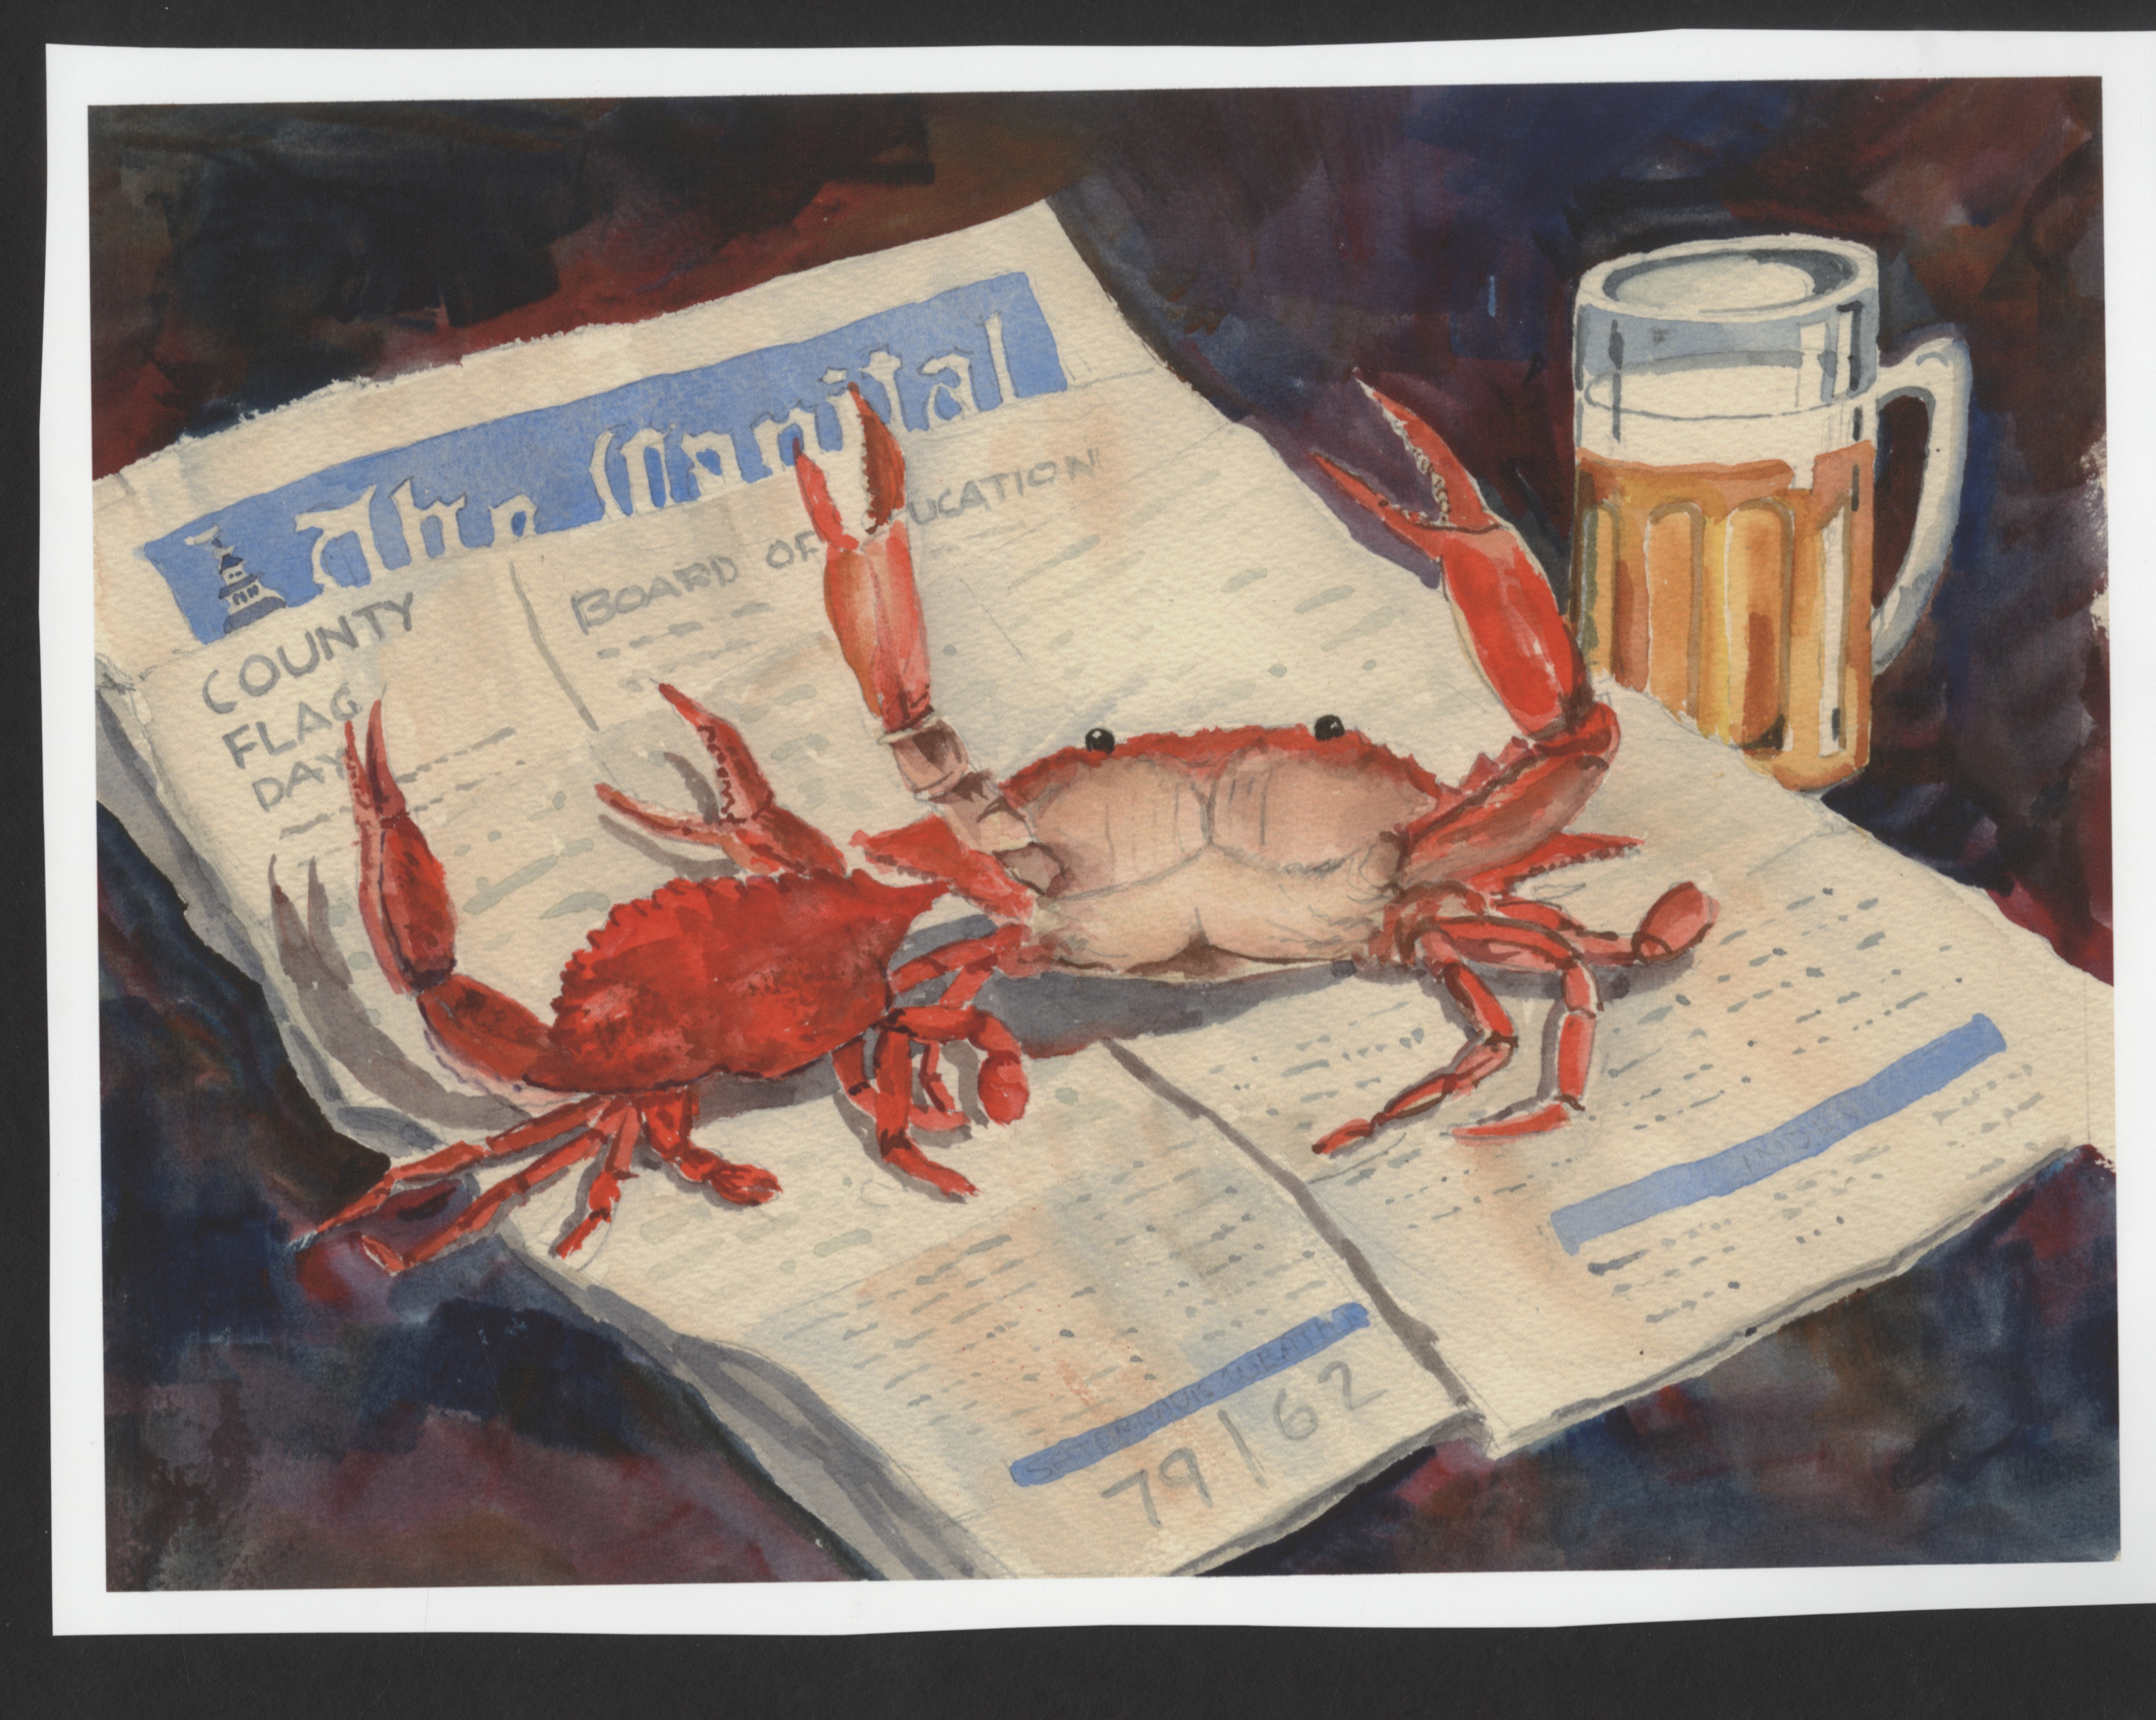 Star Crabs - David Murphy